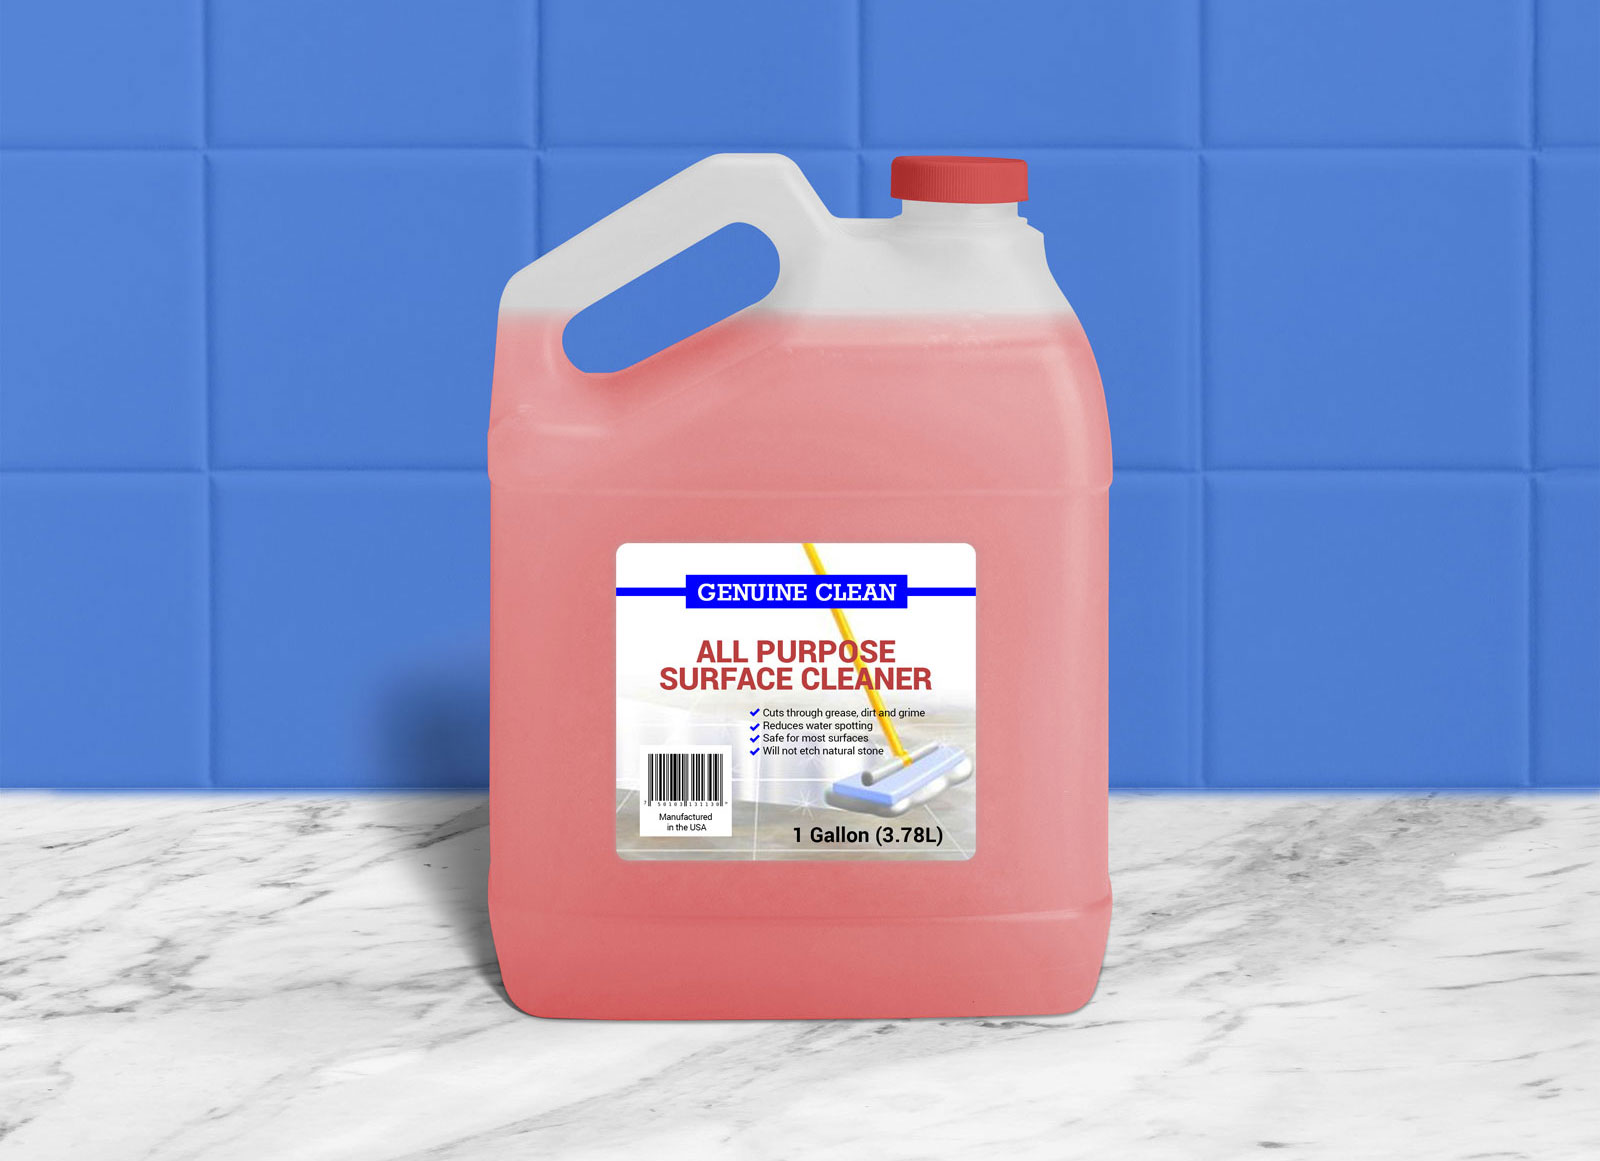 Free-1-Gallon-HDPE-Plastic-Bottle-Mockup-PSD